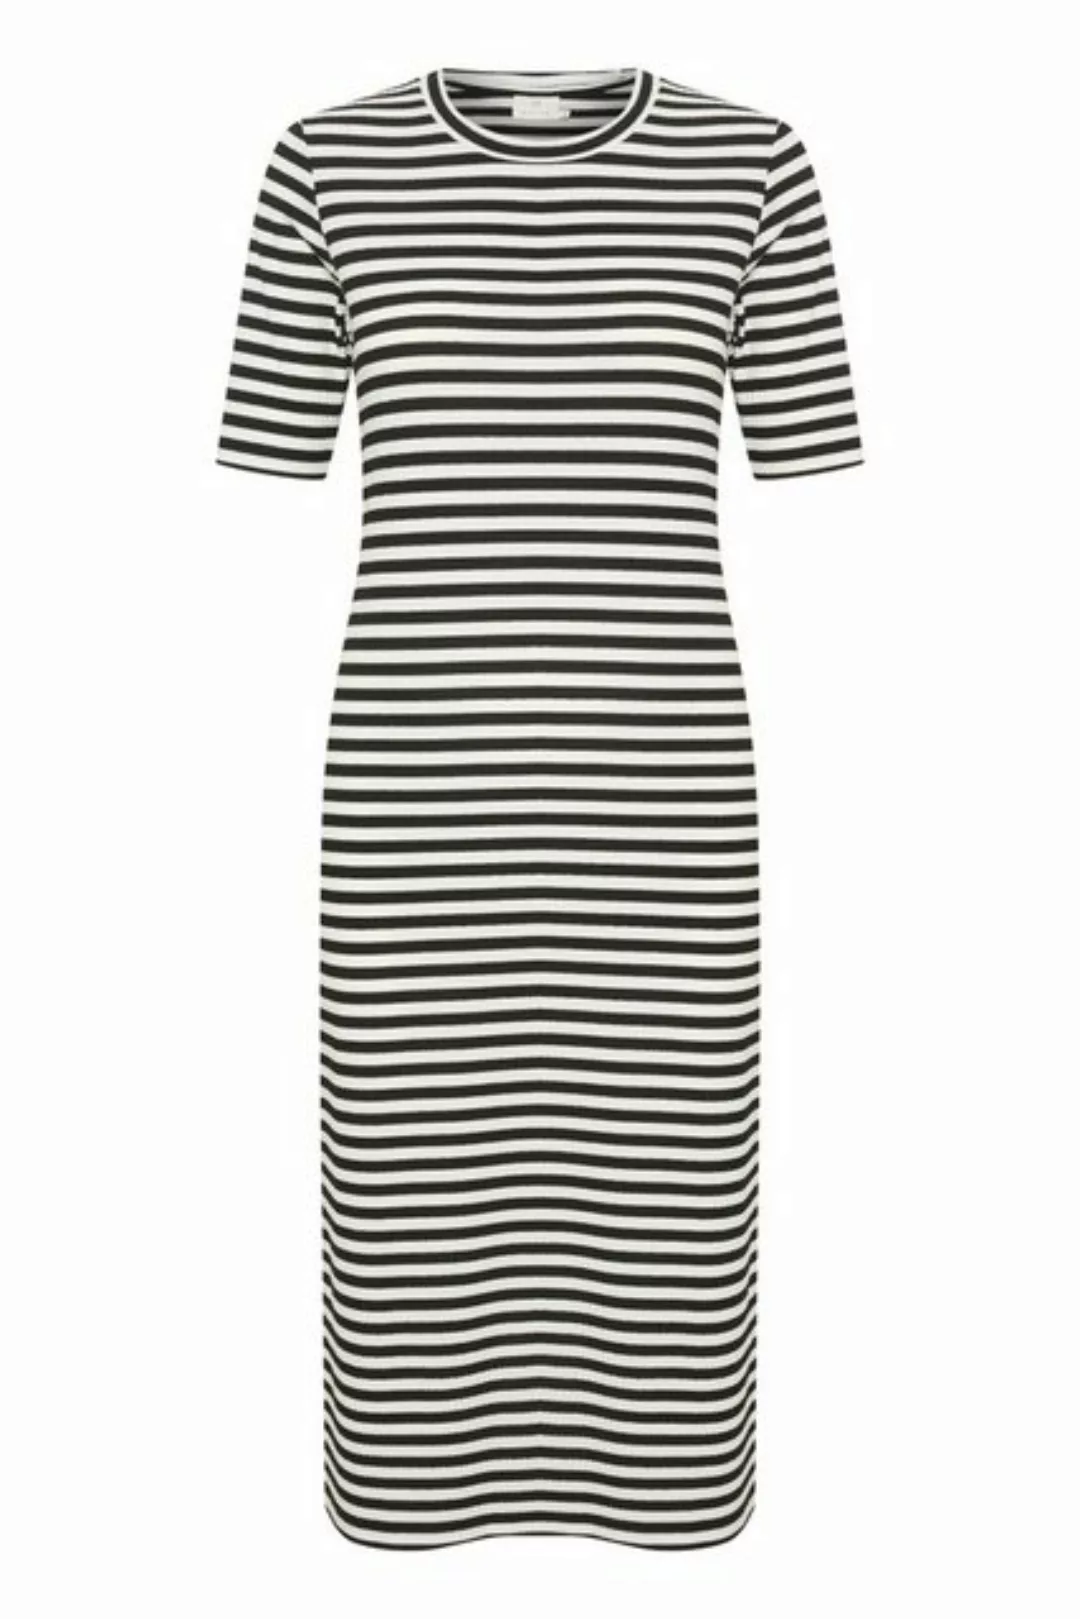 KAFFE Strickkleid Kleid KAamanda günstig online kaufen